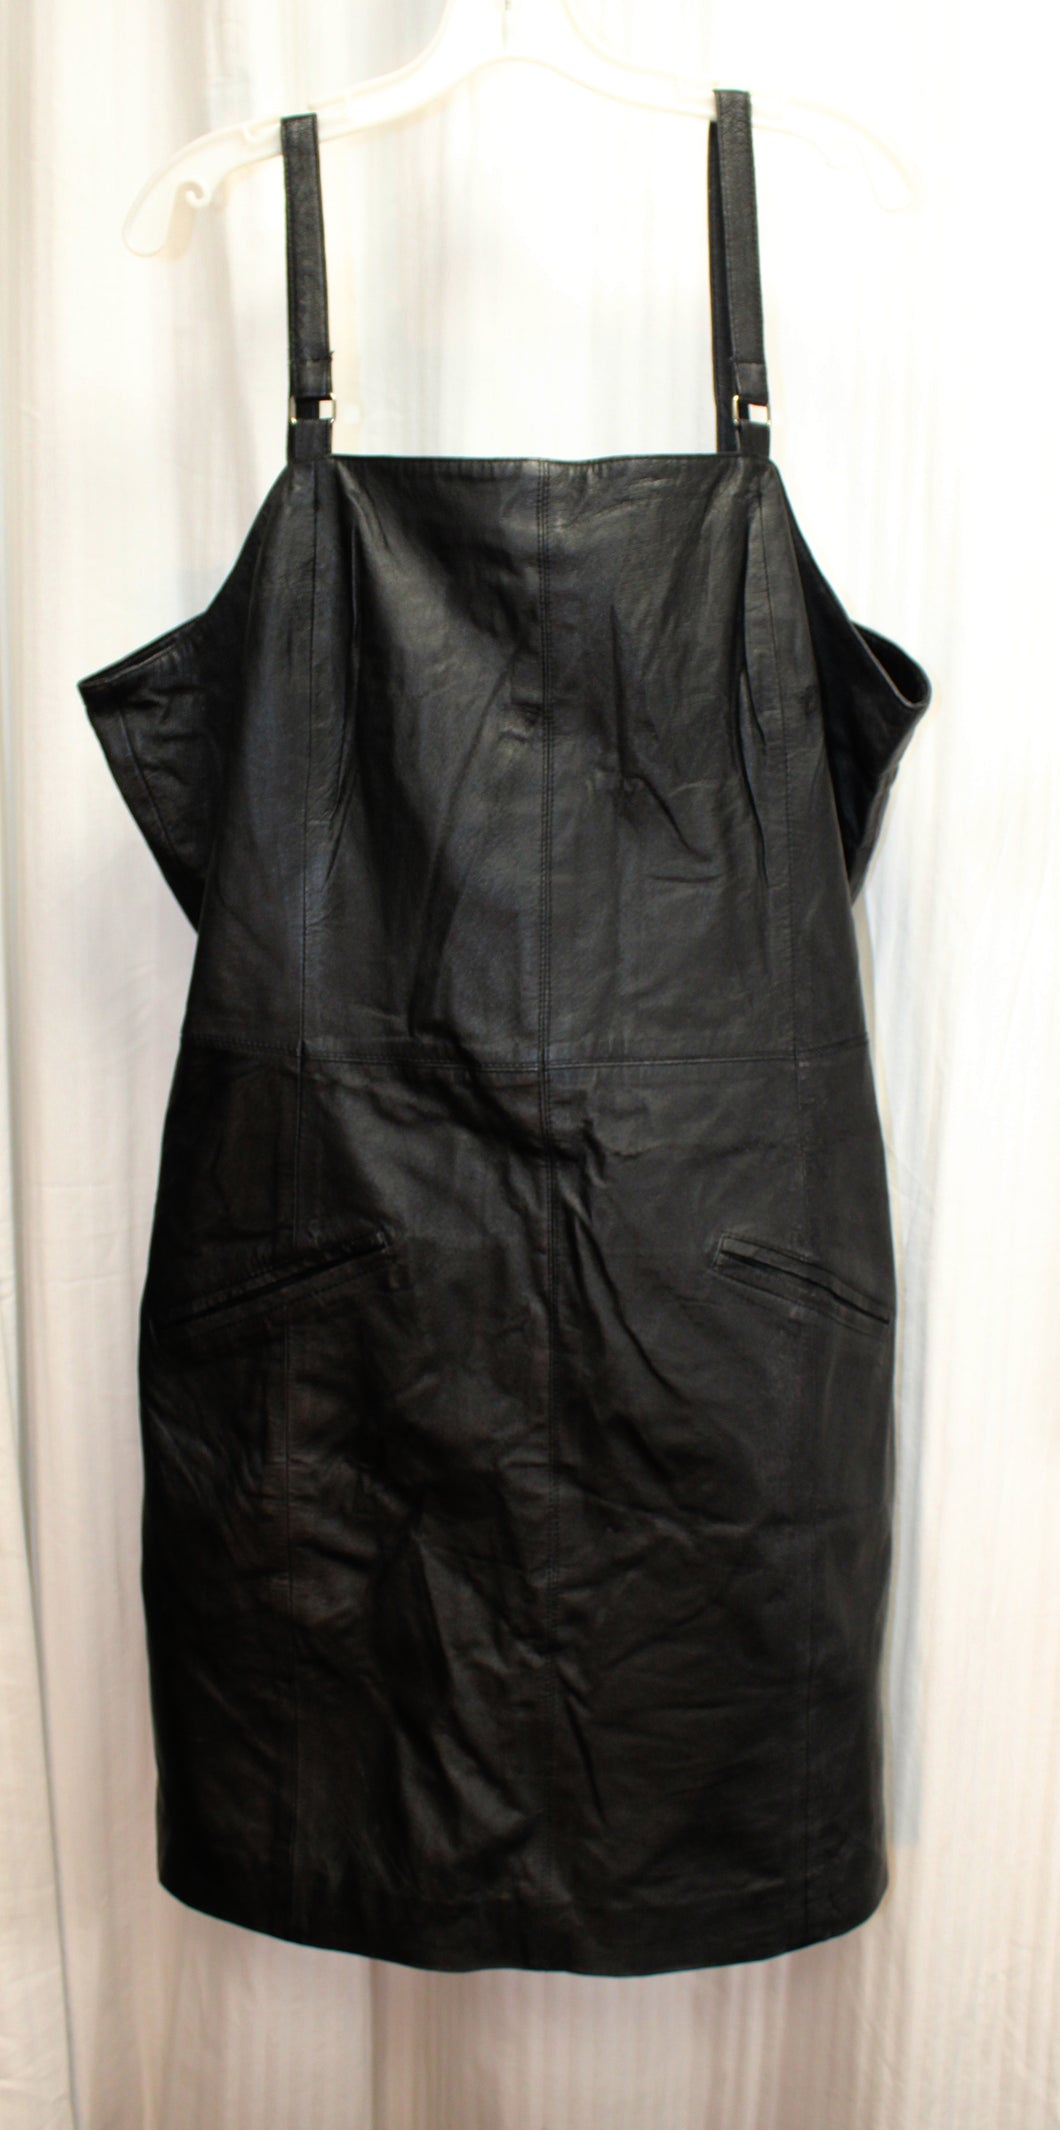 Vintage- Newport News Styleworks - Black Leather Adjustable Strap Sheath Dress - Size 22W